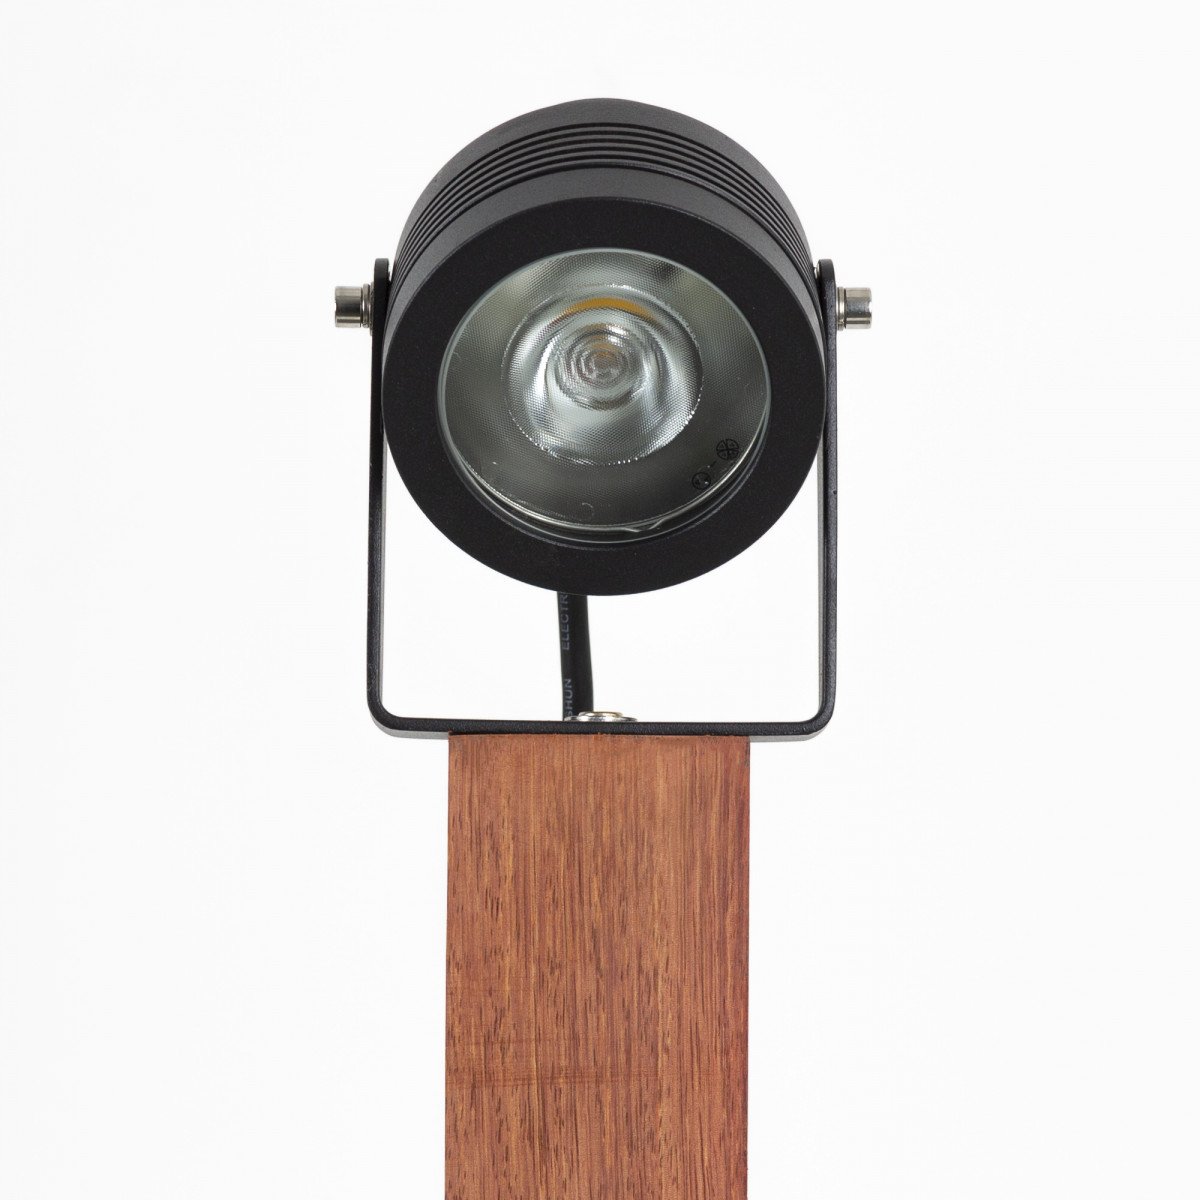 Richtbare LED tuinspot draaibaar en kantelbaar in matzwarte kleur op houten sokkel